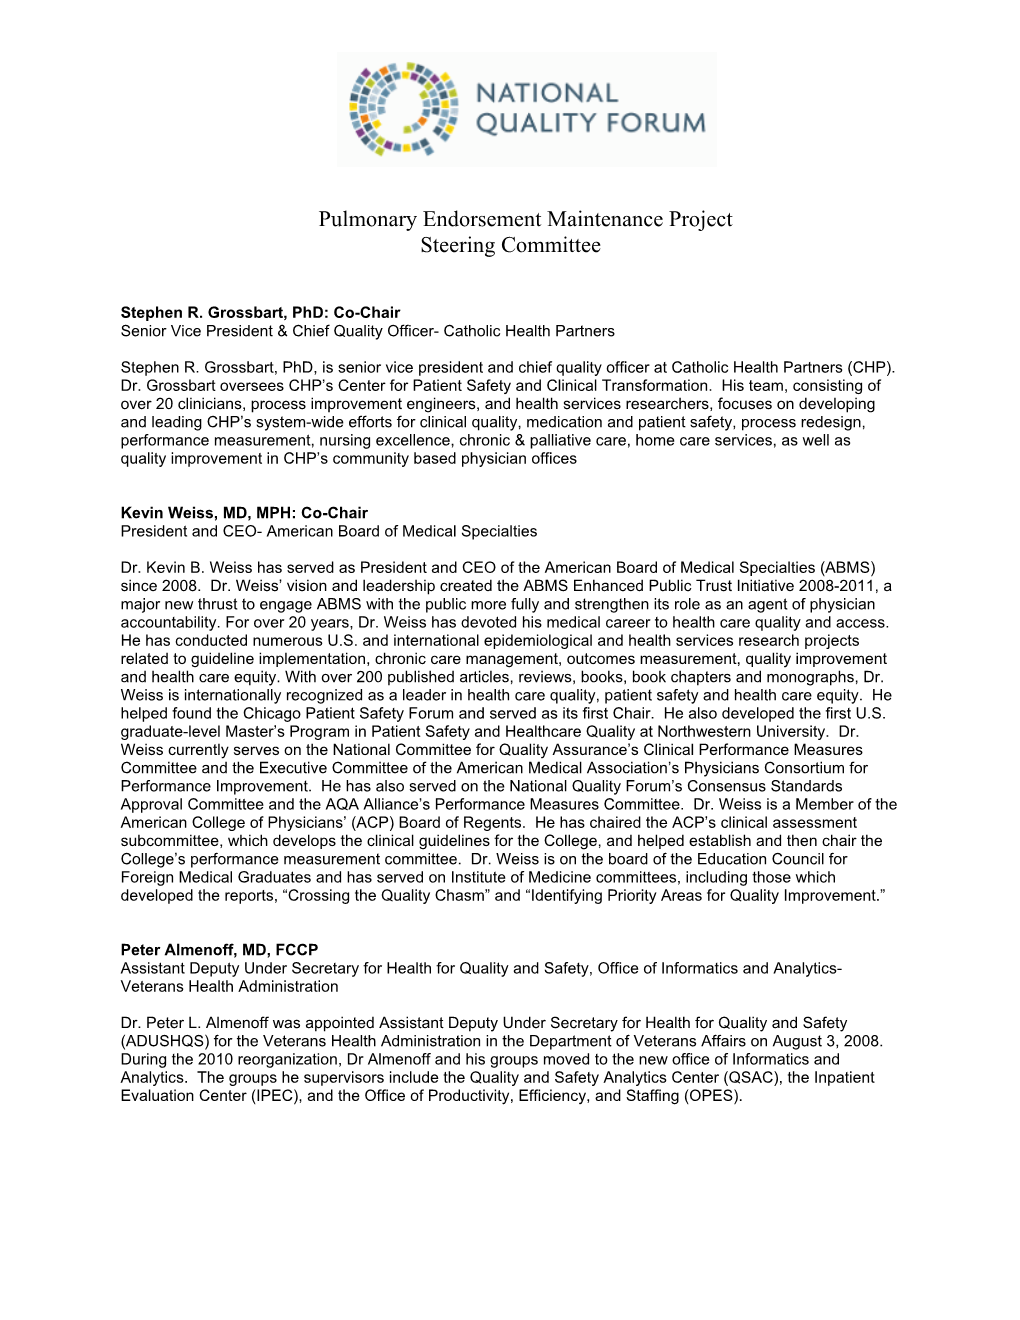 Pulmonary Endorsement Maintenance Project Steering Committee